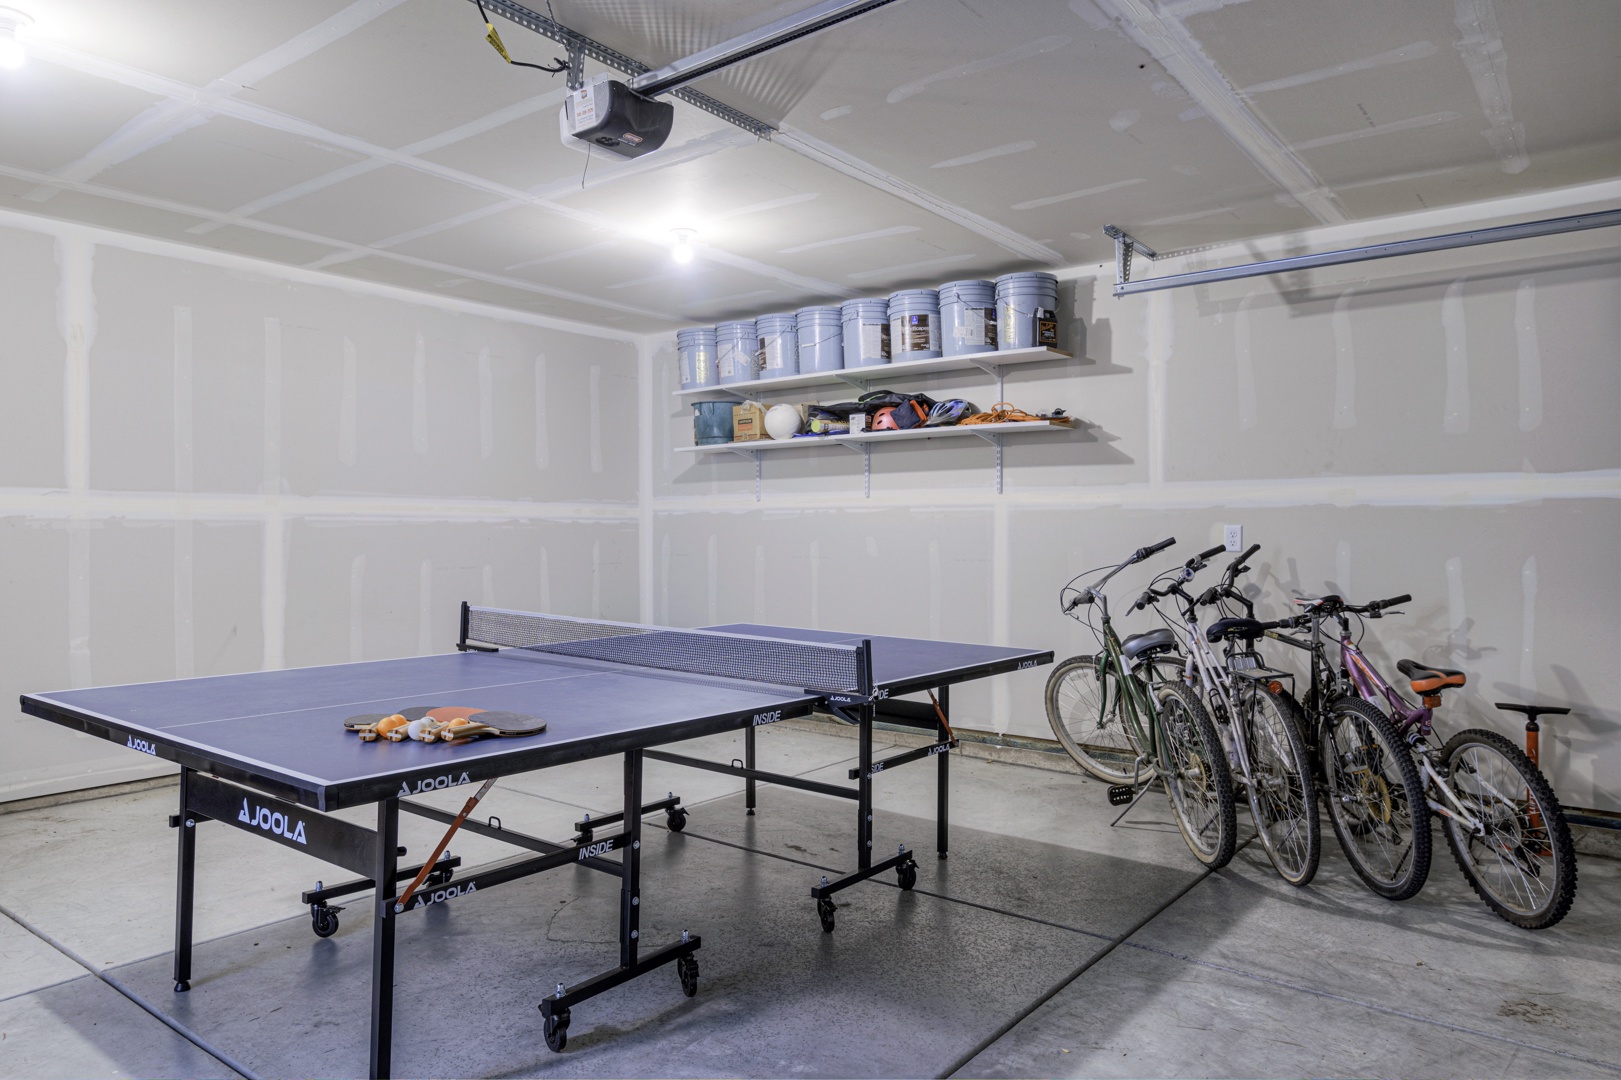 Ping pong and bikes